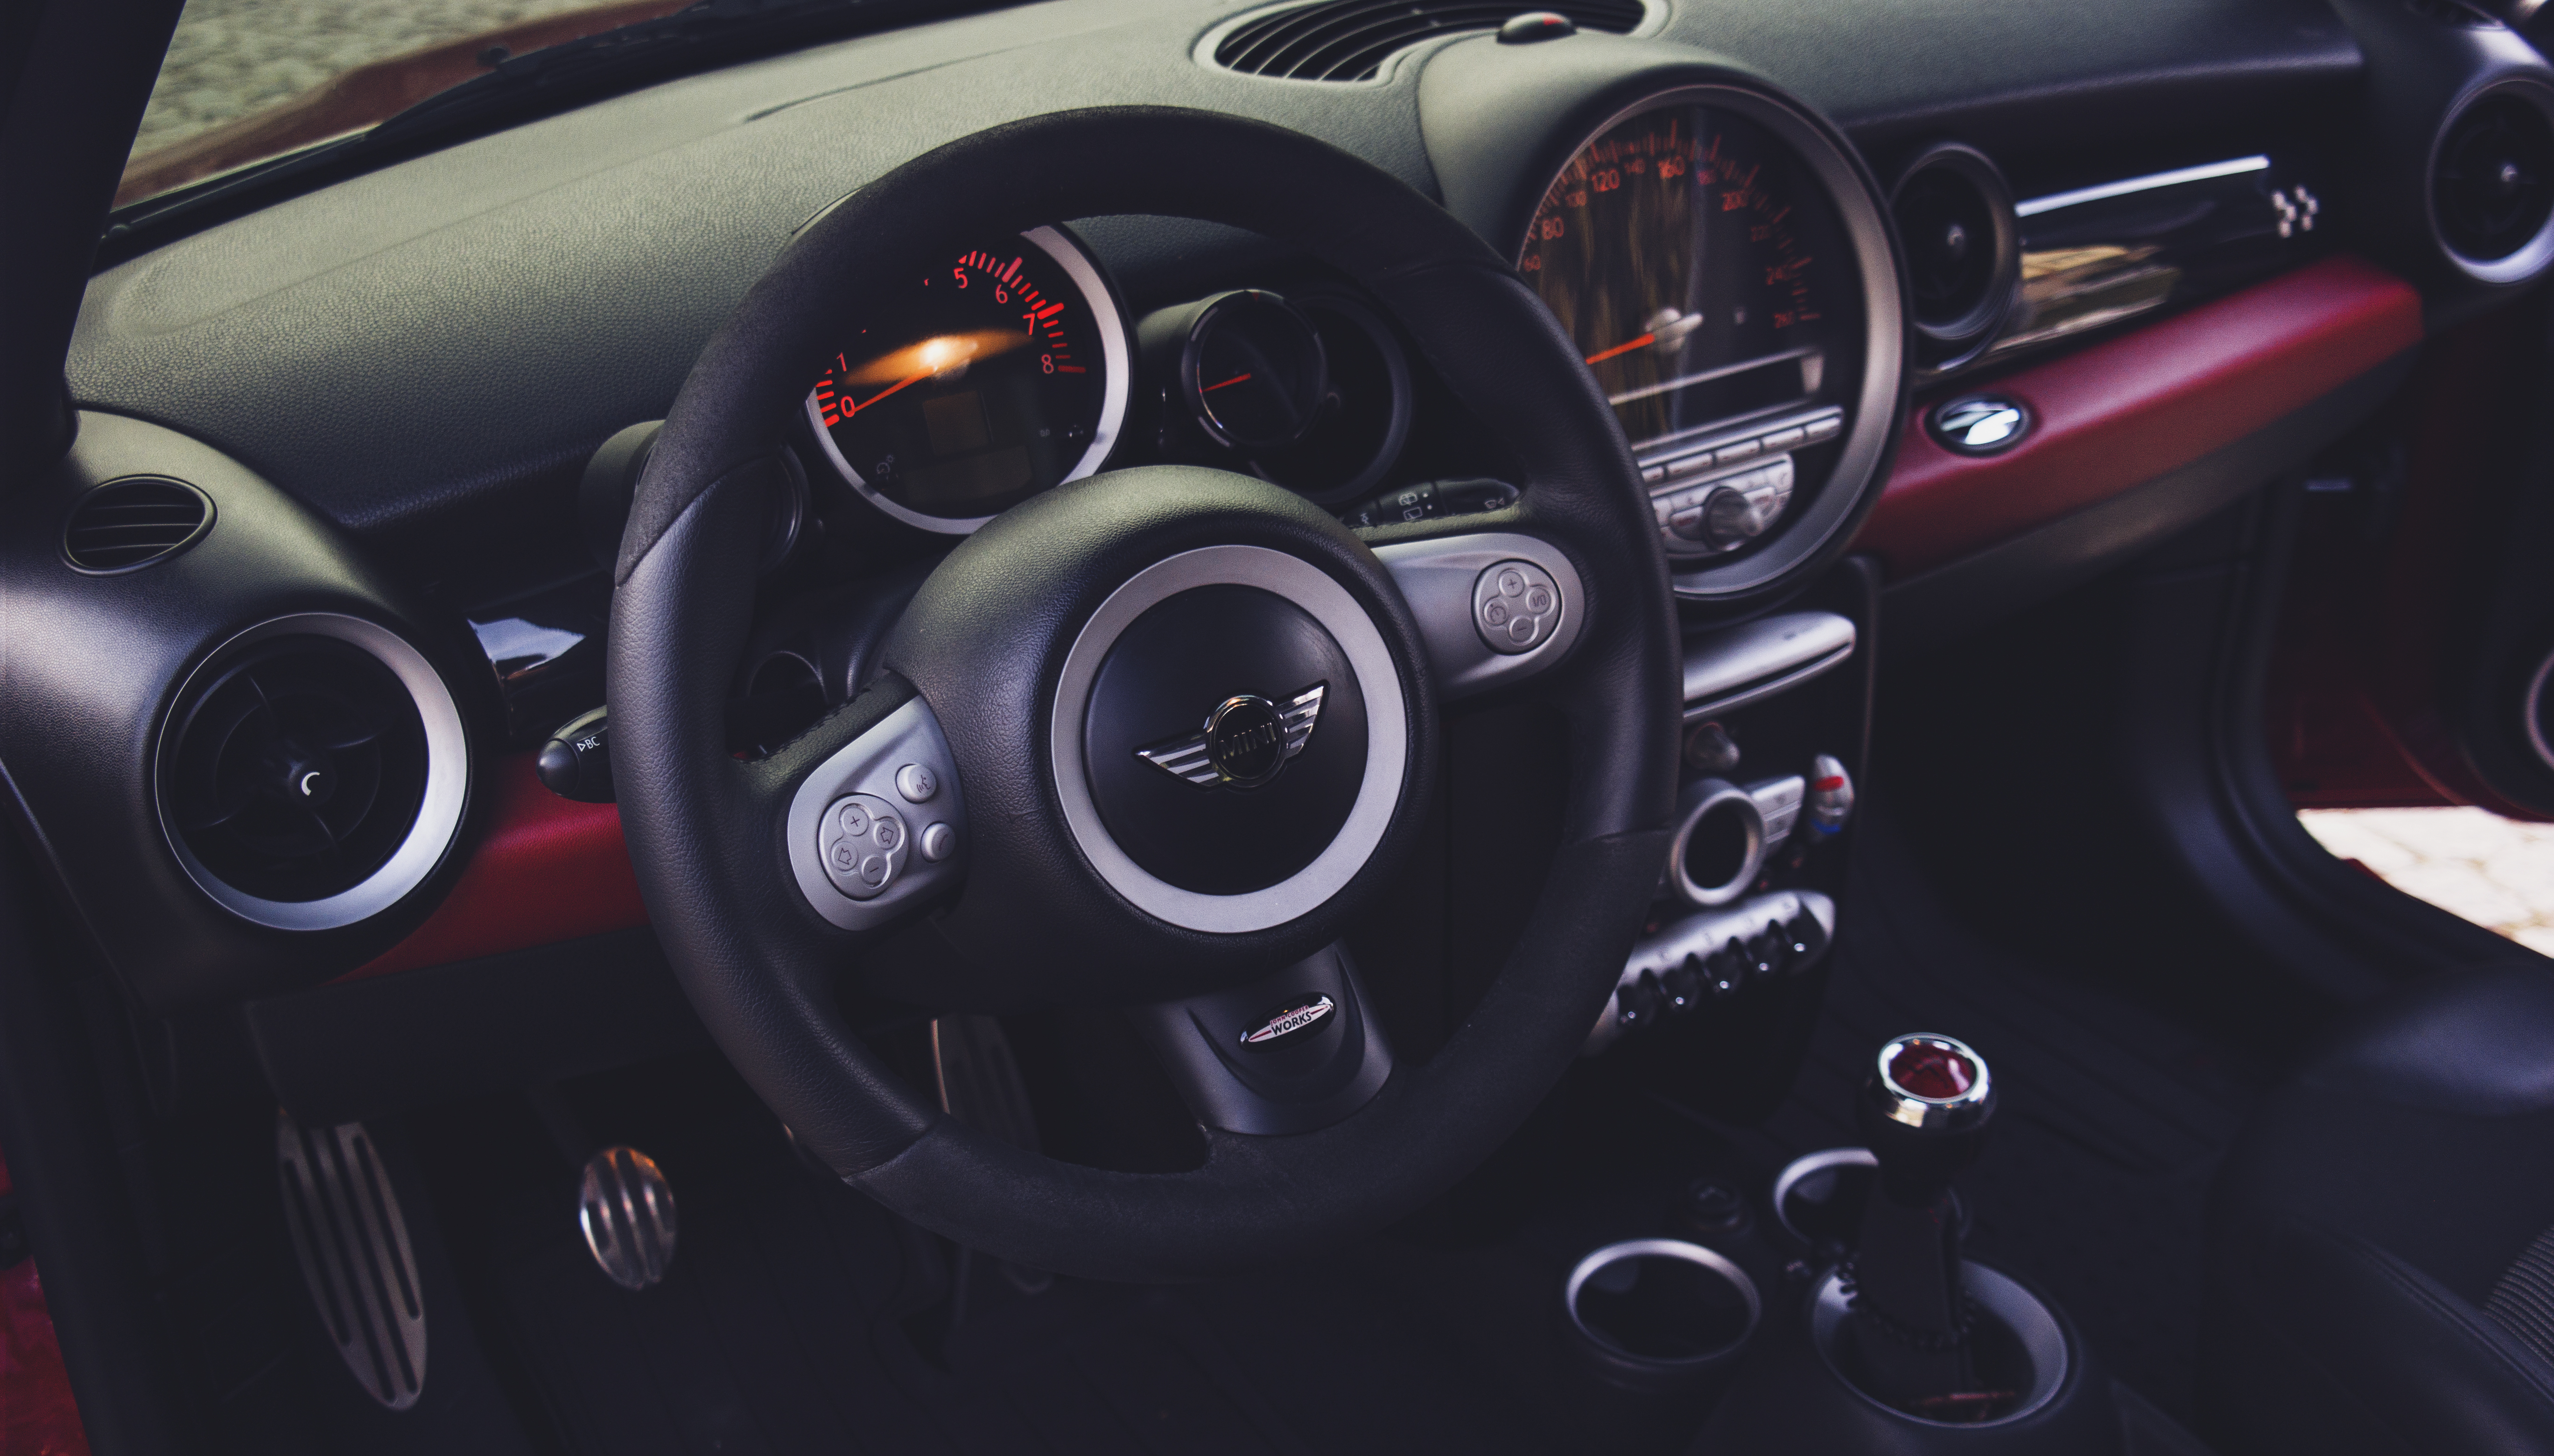 rudder, mini cooper, car interior, cars, steering wheel, vehicle interior